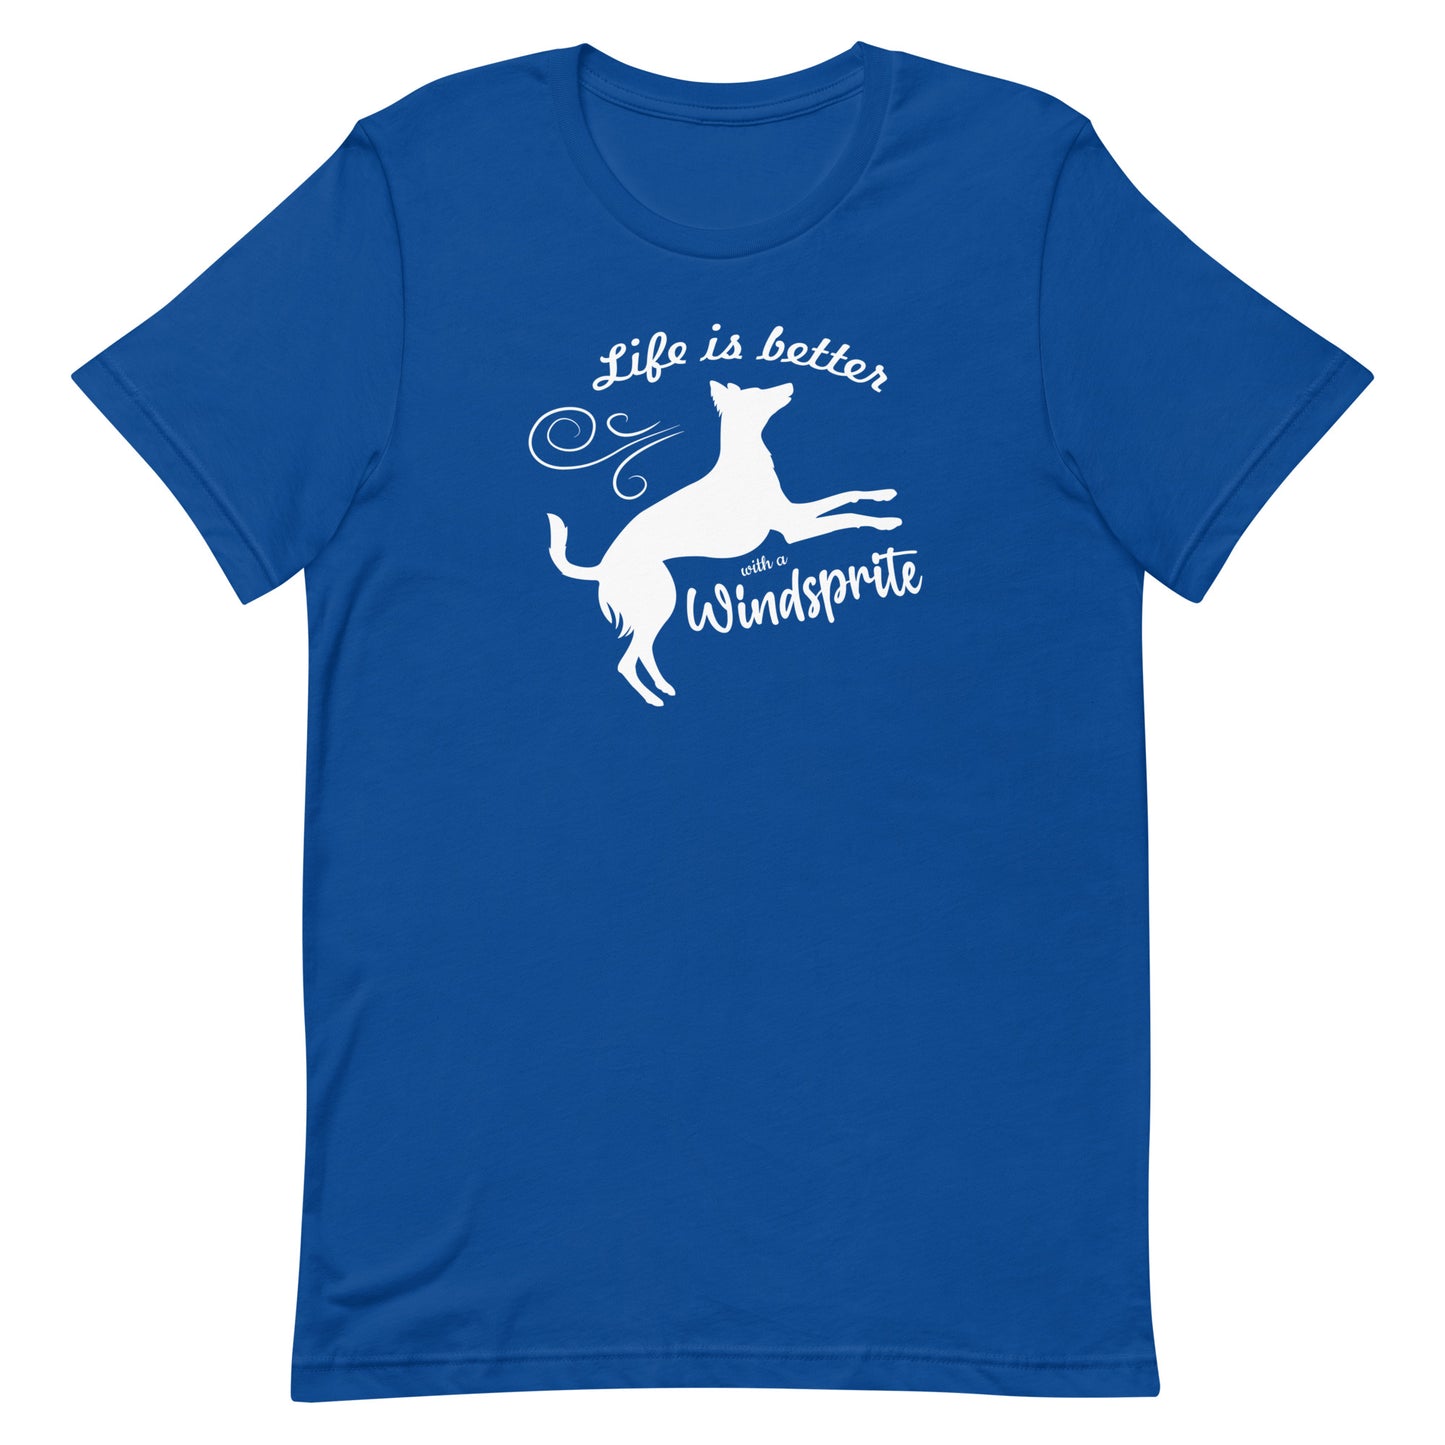 WINDSPRITE - Life is better- Unisex t-shirt